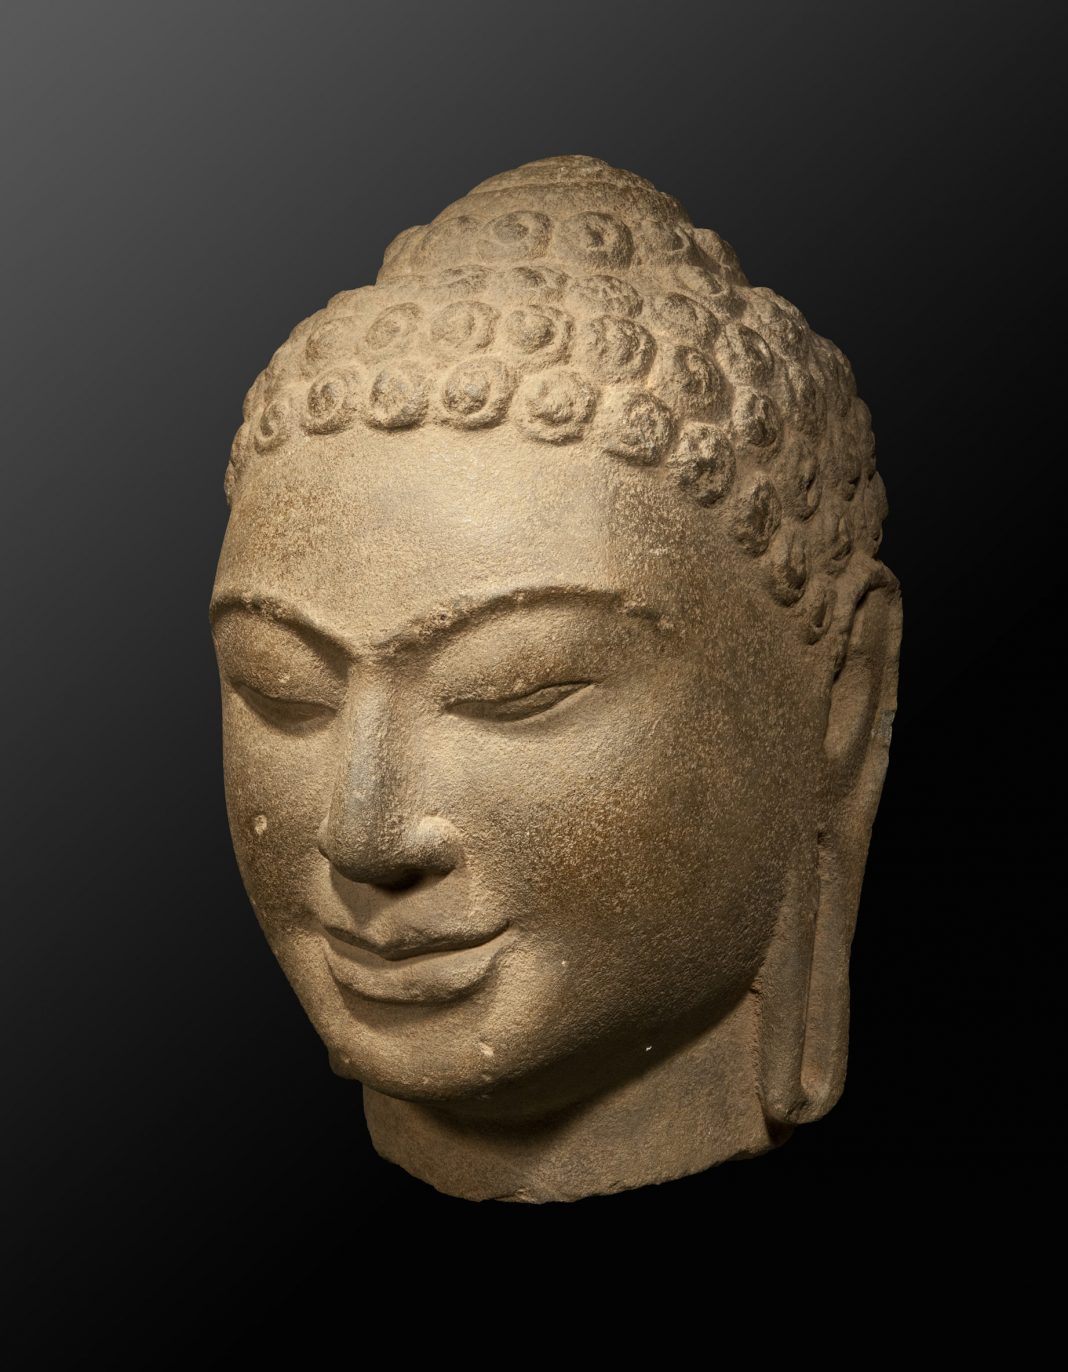 Phu Nam, Mon, Khmer. Nove Secoli di Arte Indo-Buddista nel Sud Est Asiaticohttps://www.exibart.com/repository/media/eventi/2015/04/phu-nam-mon-khmer.-nove-secoli-di-arte-indo-buddista-nel-sud-est-asiatico-1068x1372.jpg